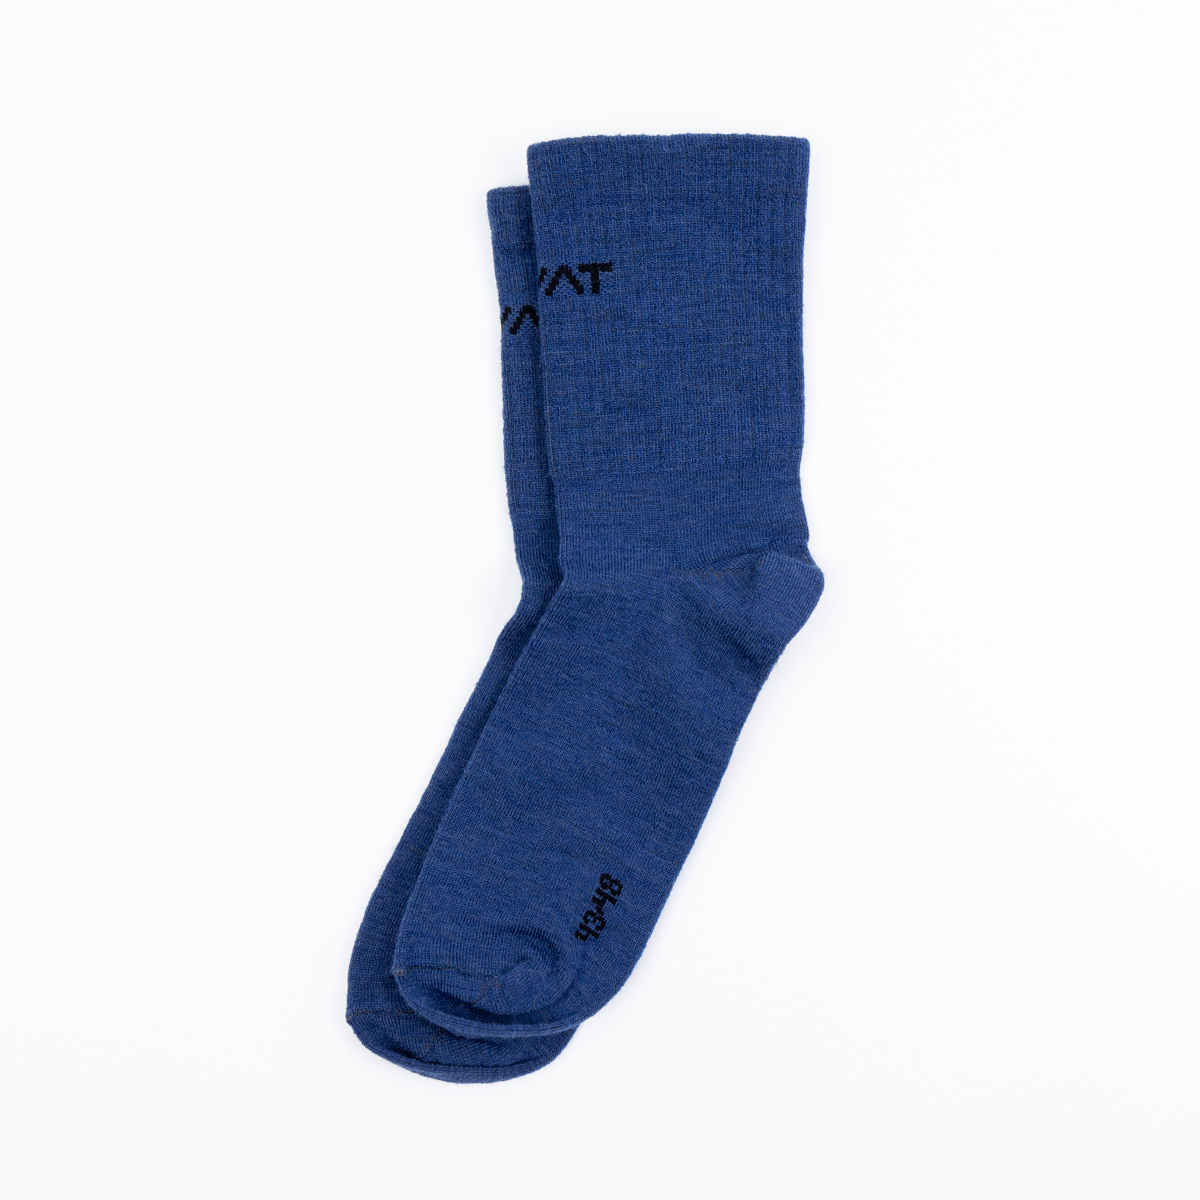 Lappe Merino Sock Ocean blueproduktzoombild #1